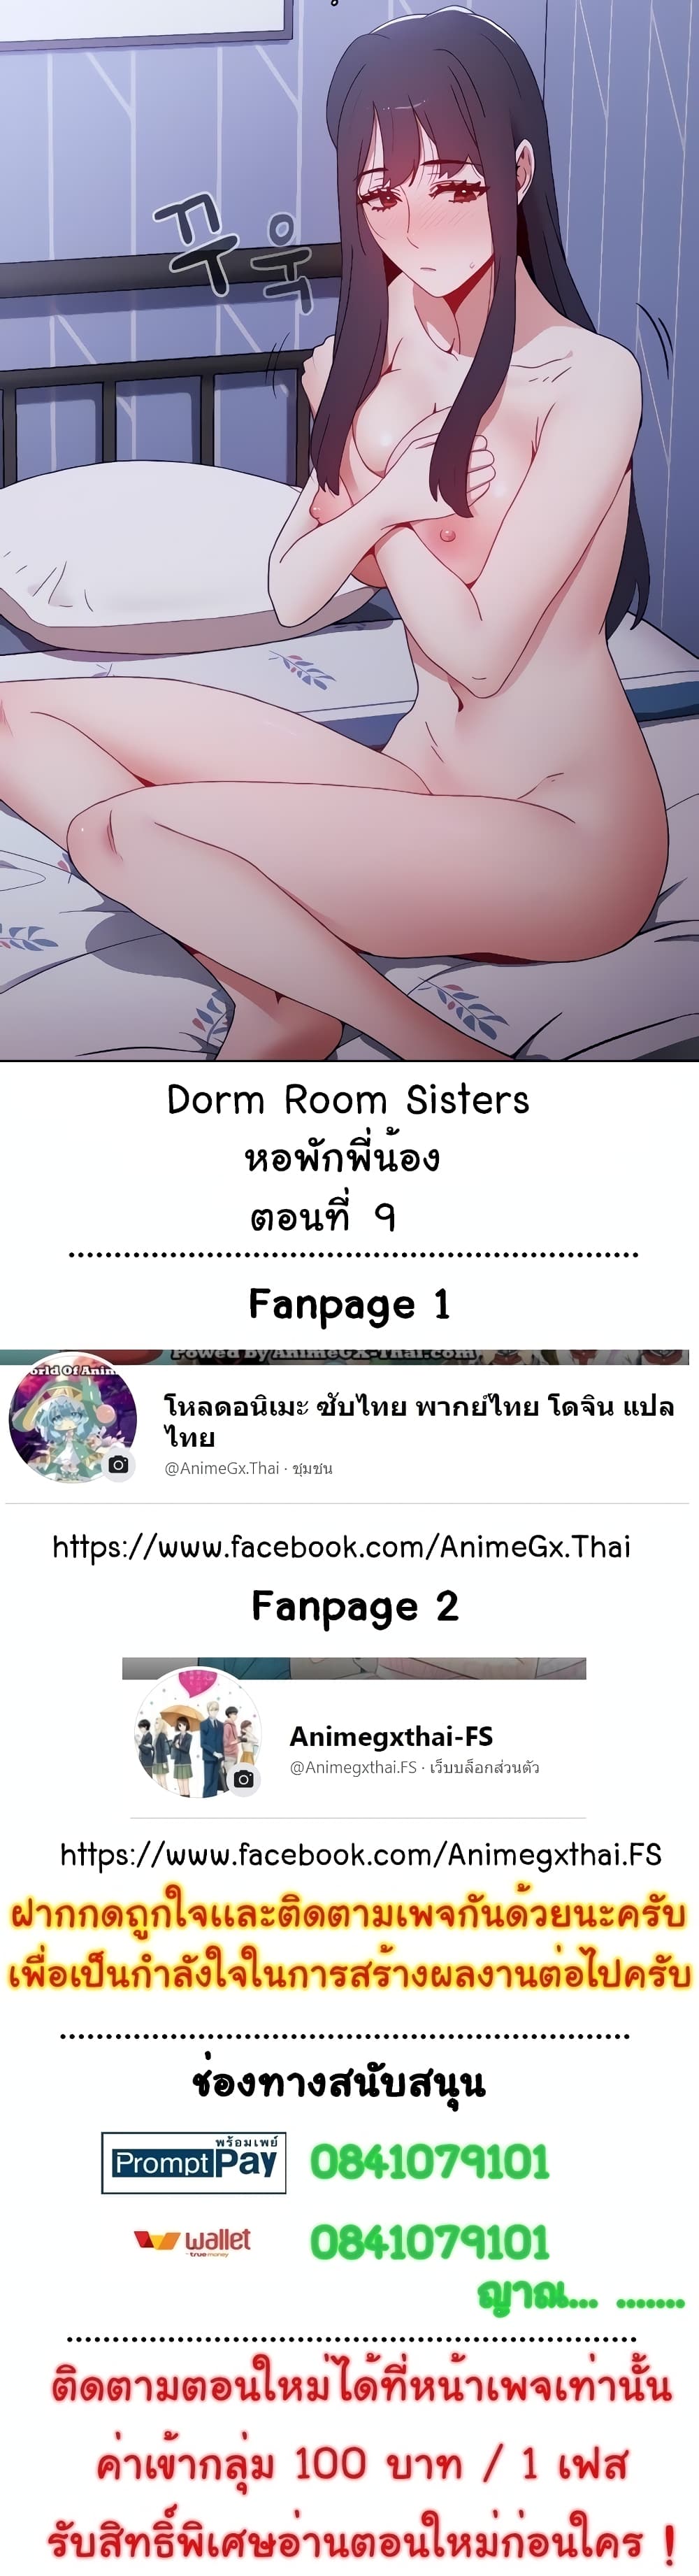 Dorm Room Sisters 9-9